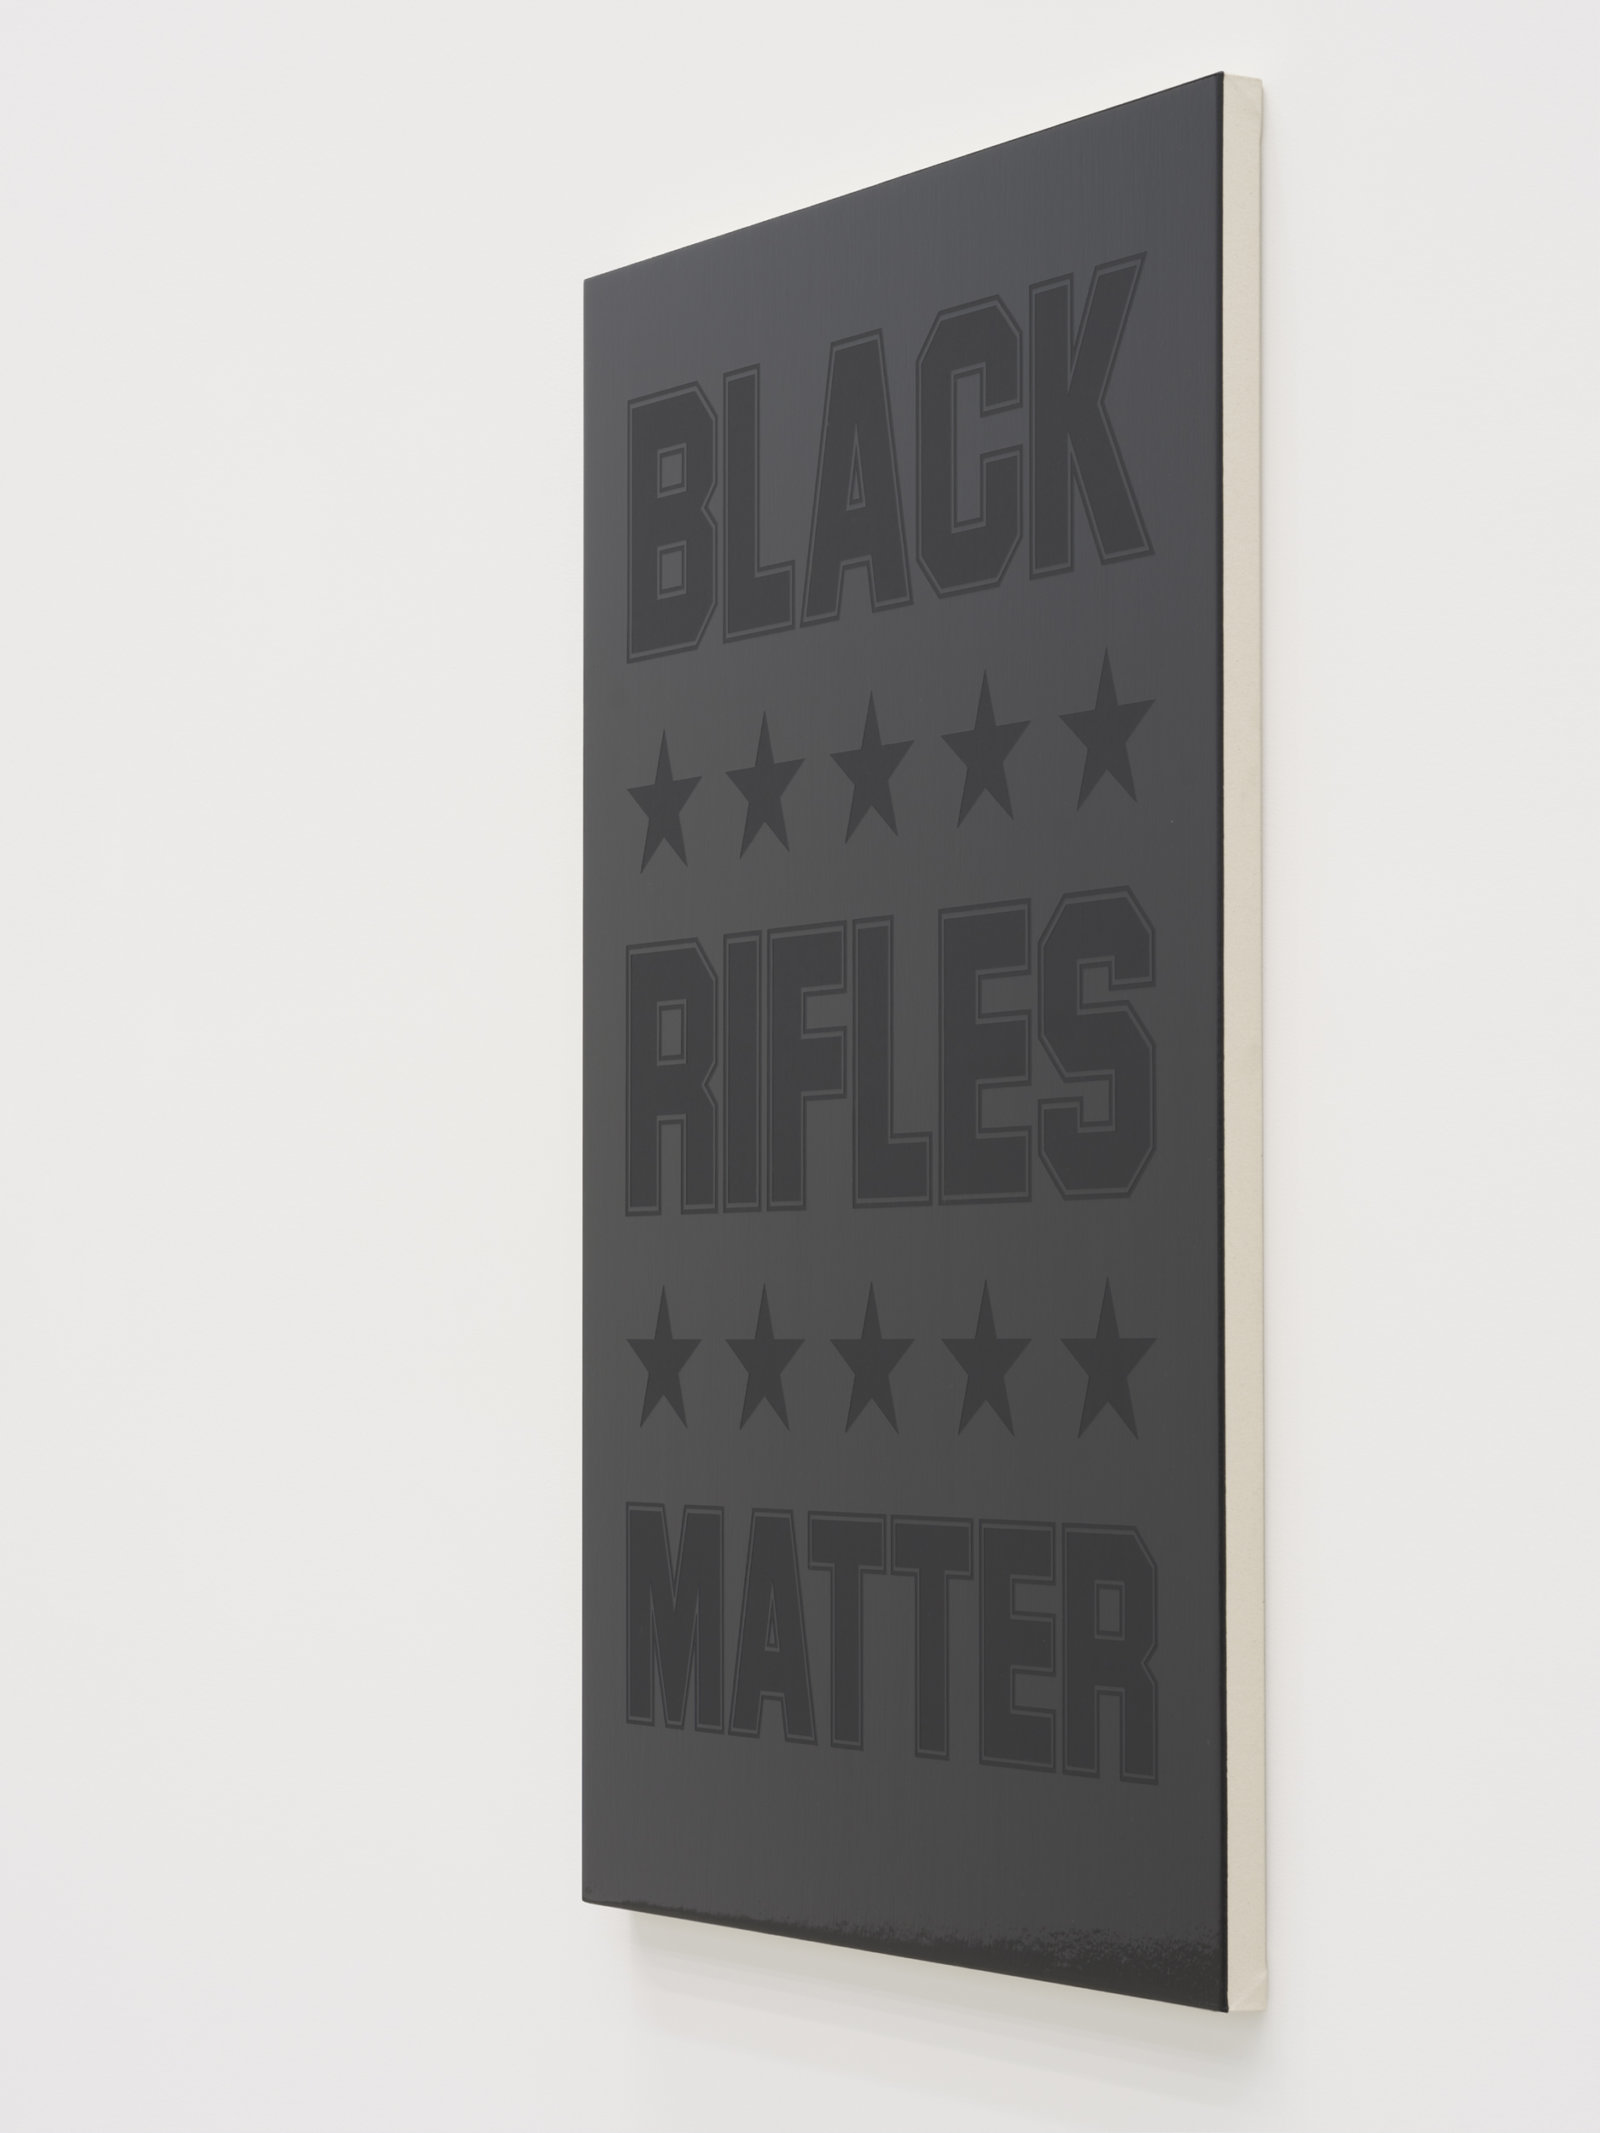 Ron Terada, Black Rifles Matter, 2023, acrylic on canvas, 60 x 40 in. (152 x 102 cm)